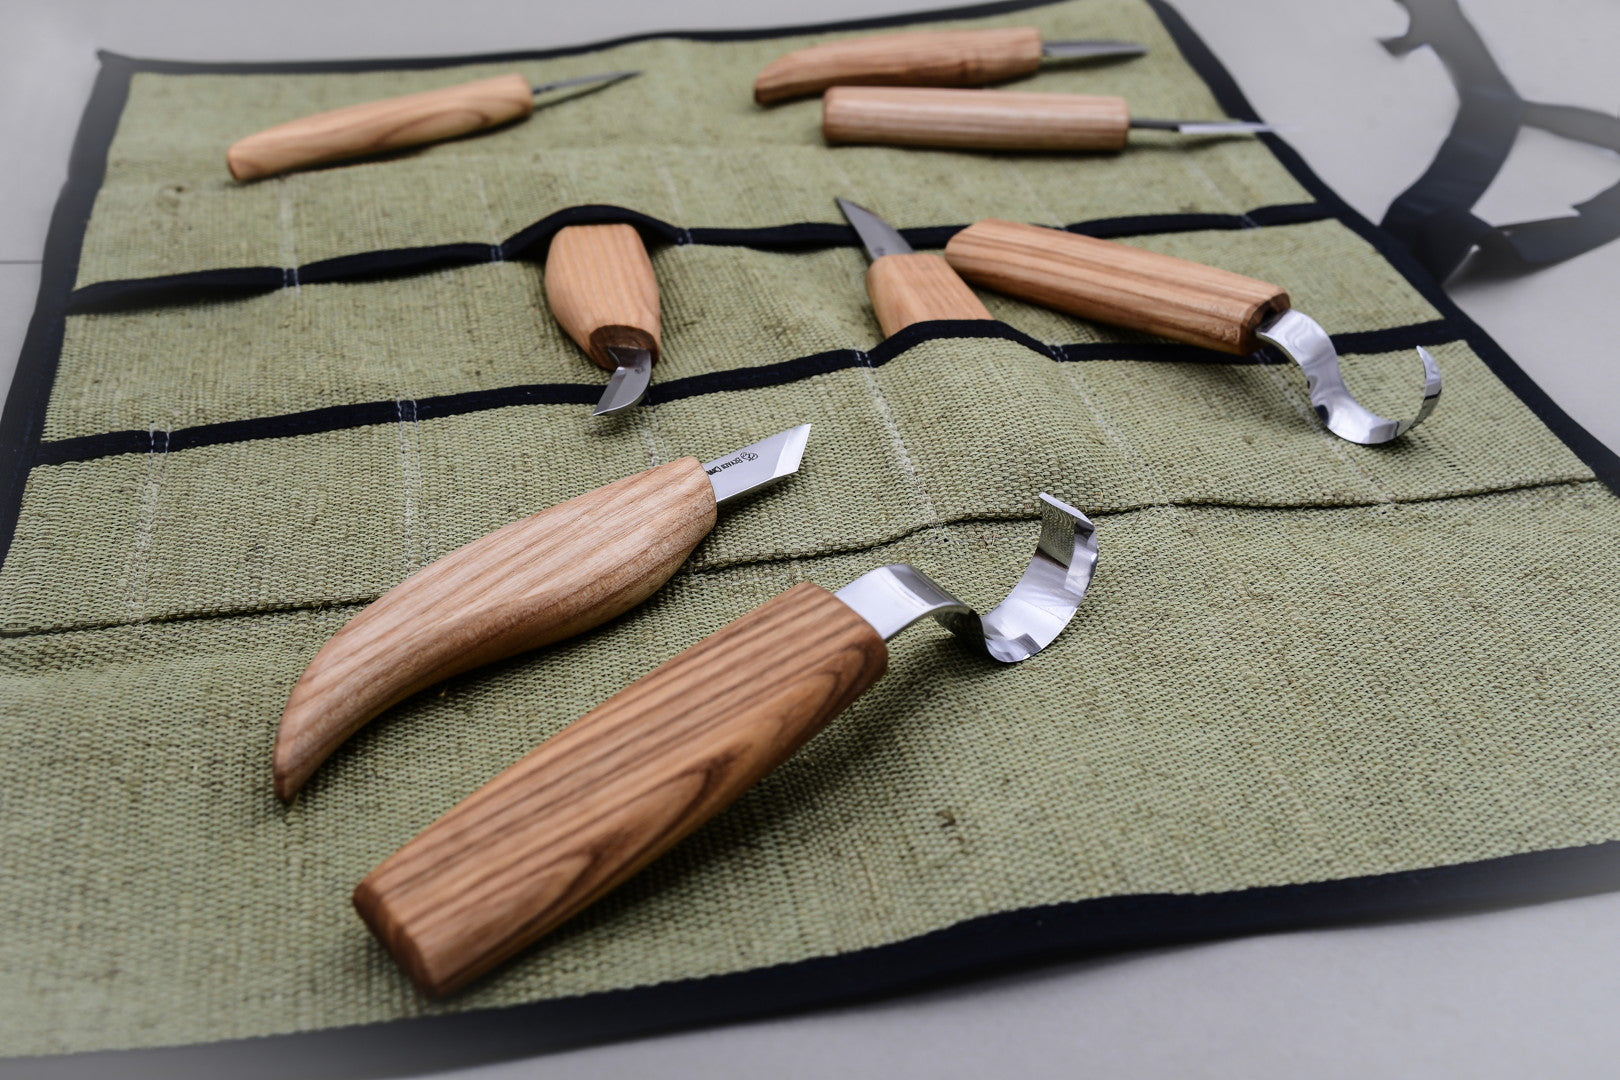 S08L - Professional Left-Handed Wood Carving Set of 8 Knives